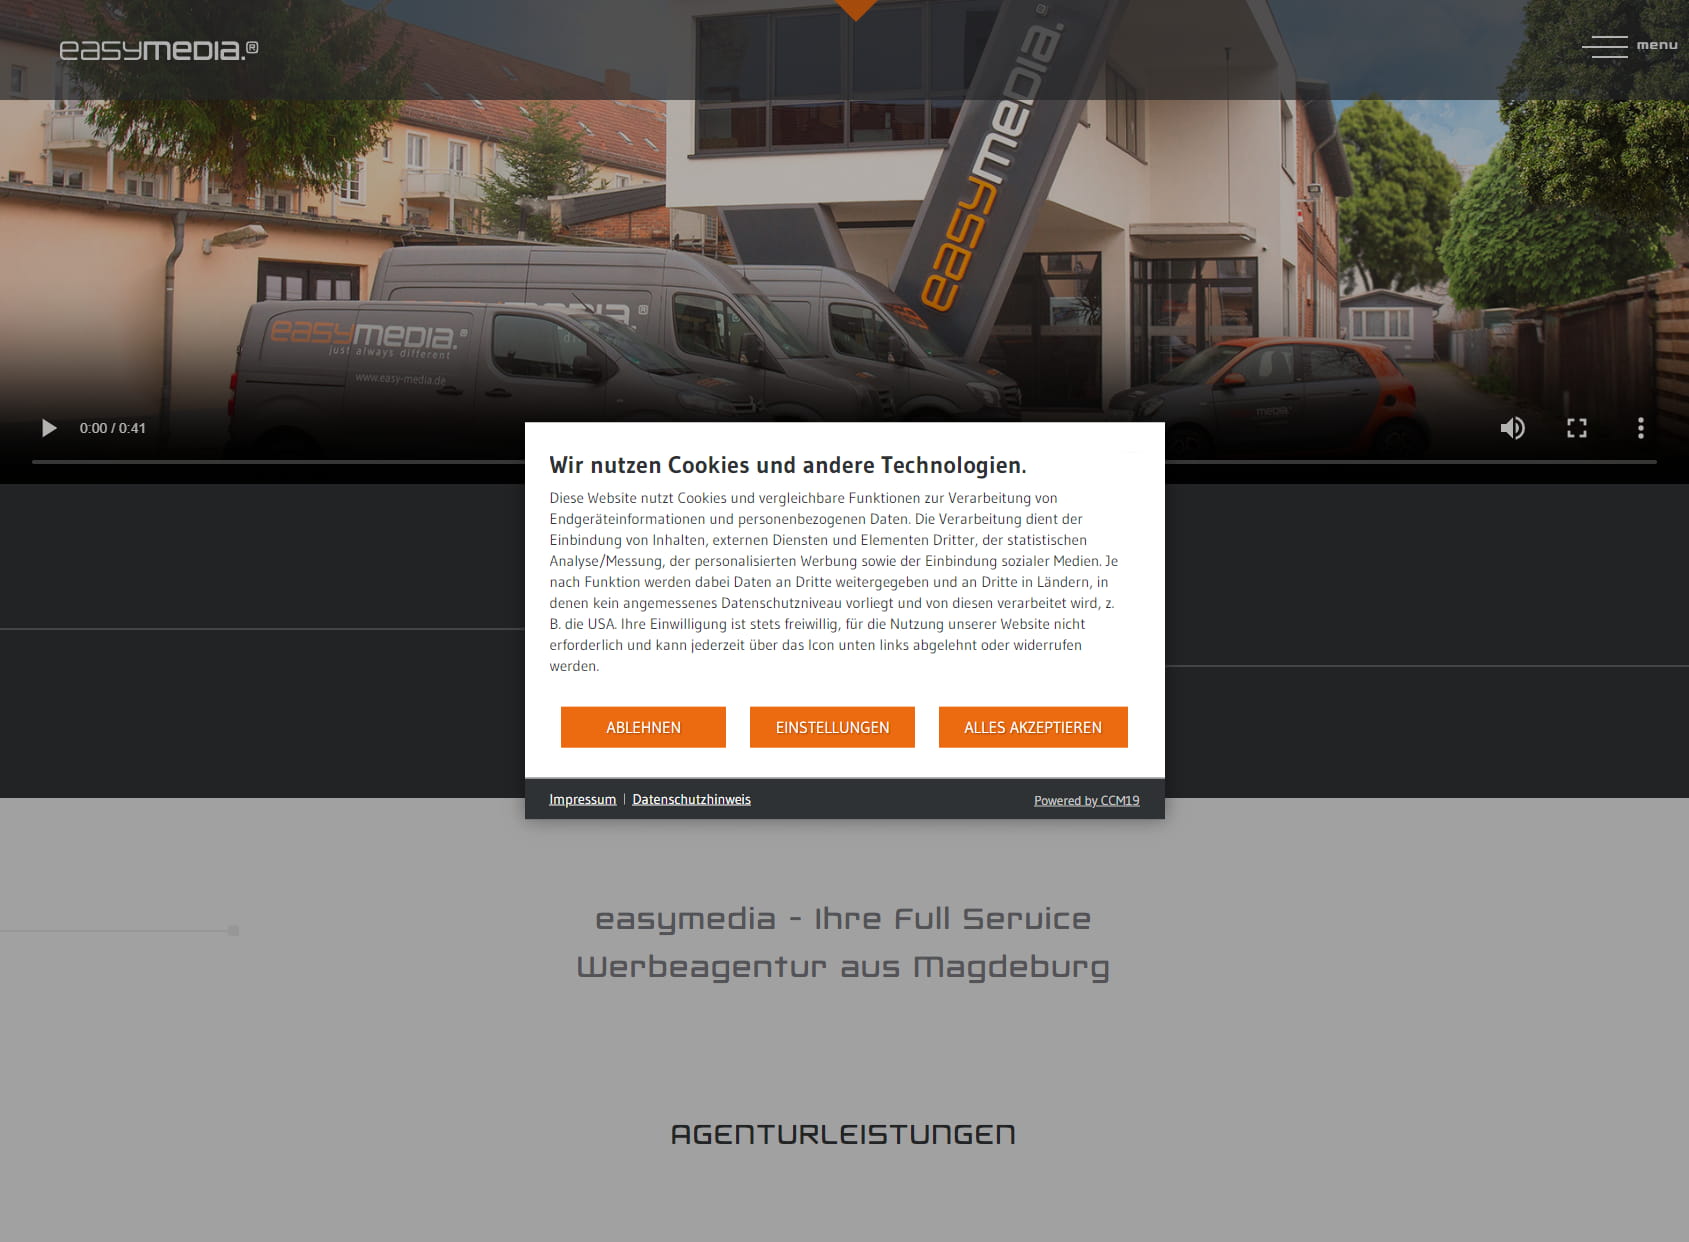 easymedia GmbH | Full Service Werbeagentur aus Magdeburg